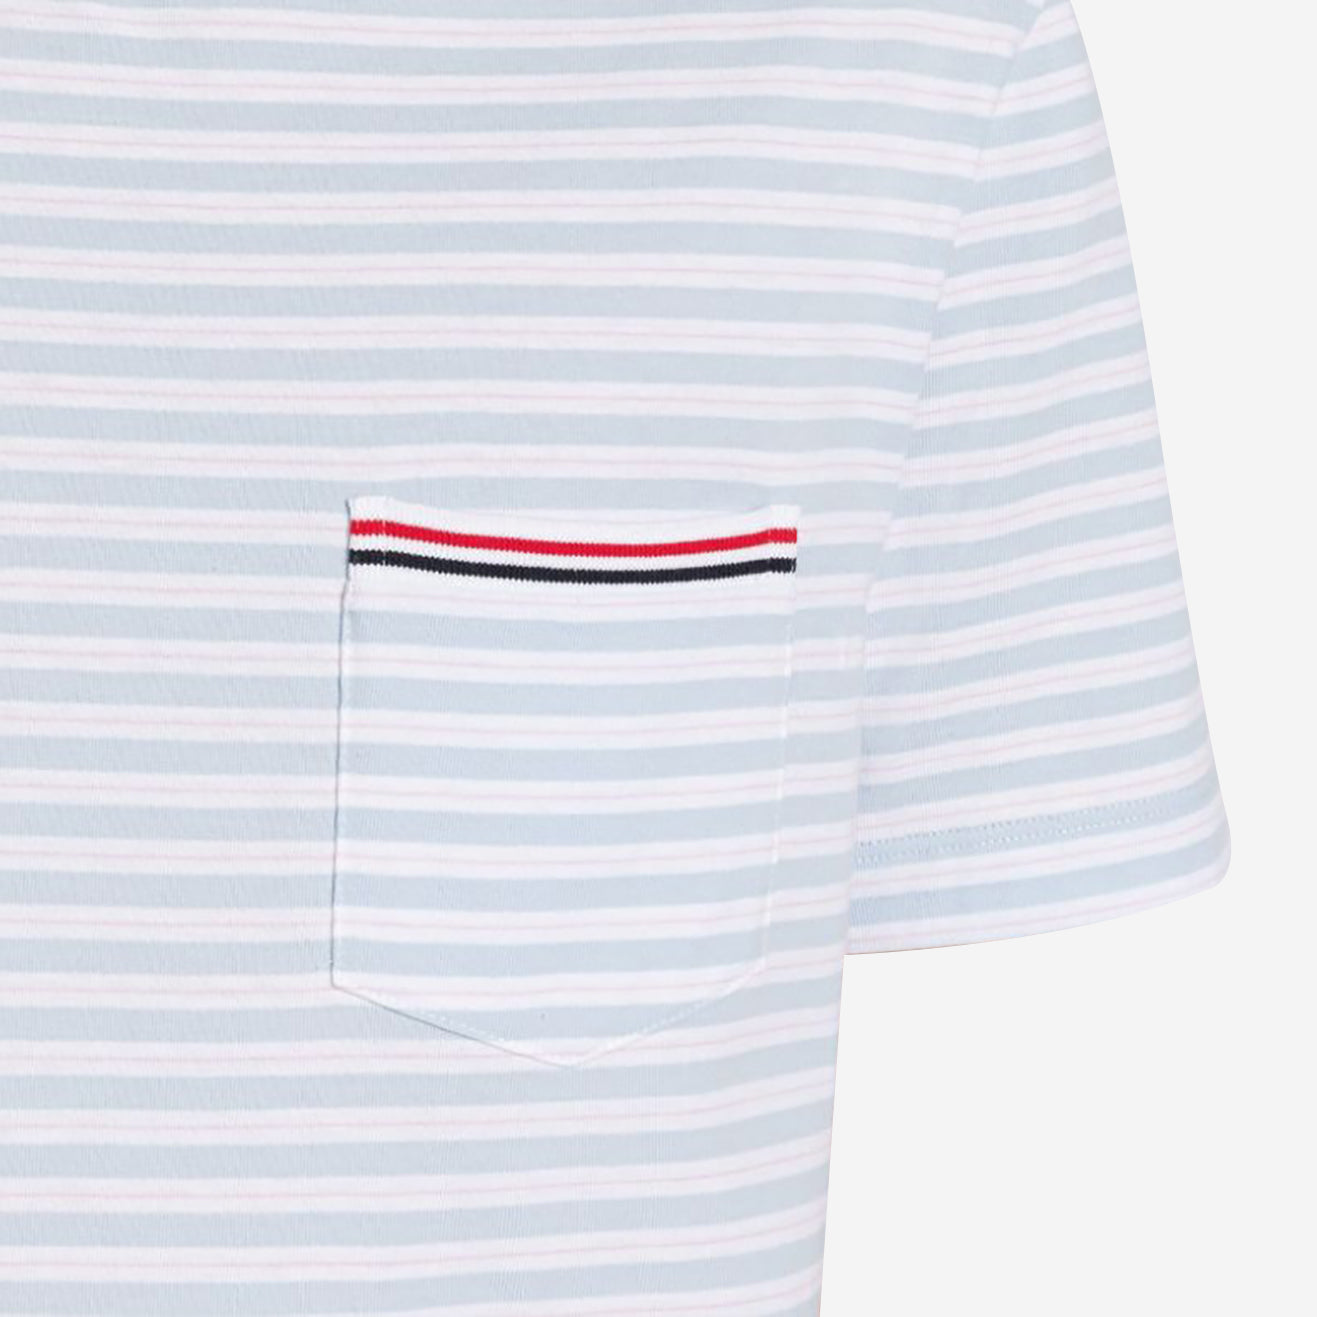 Thom Browne Stripe Jersey Pocket T-Shirt